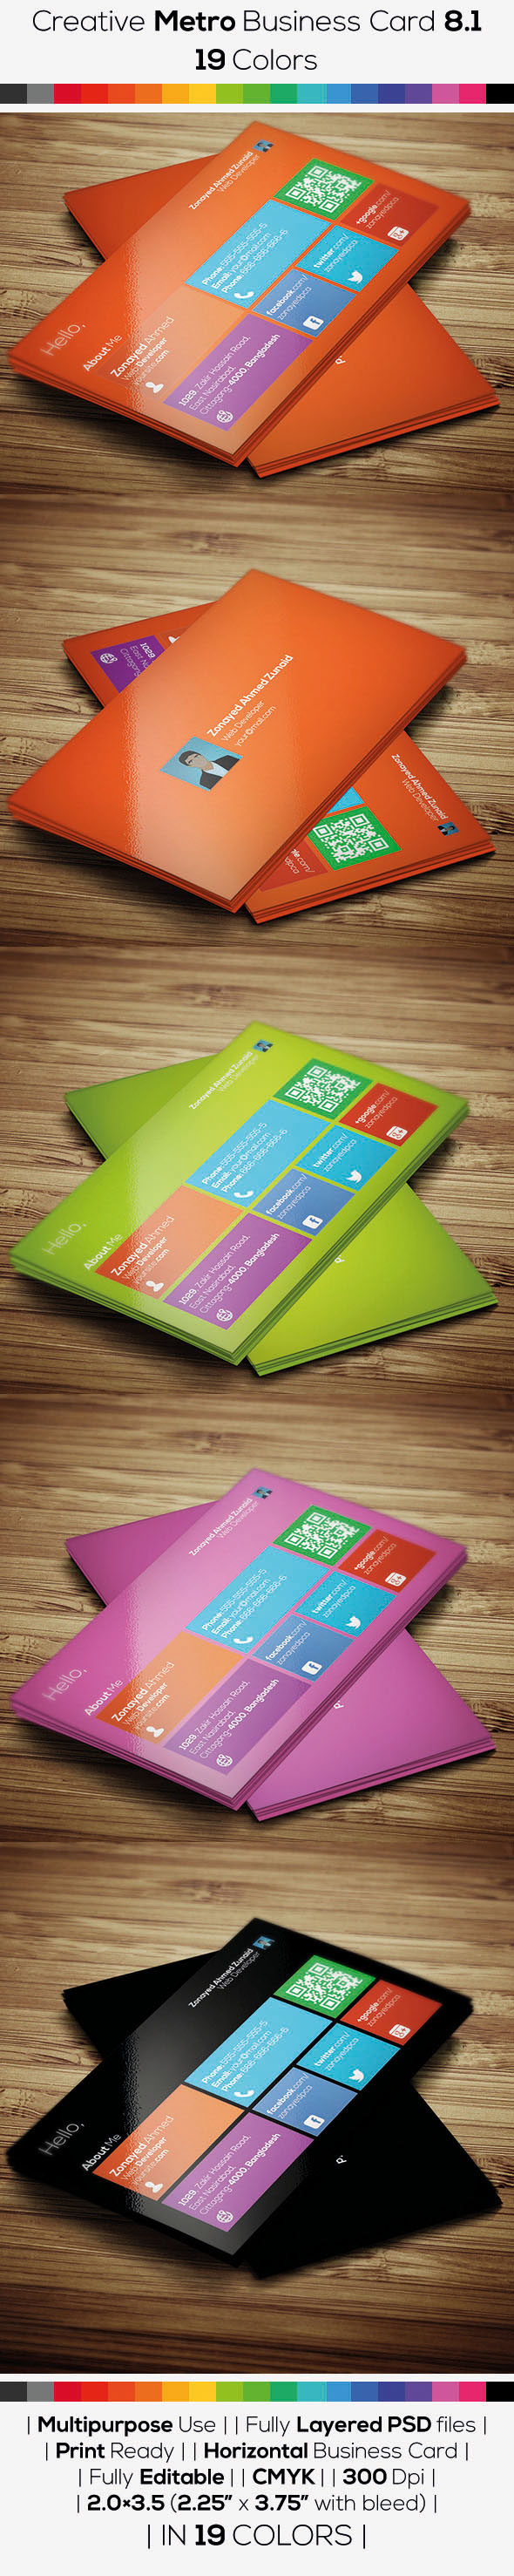 metro Windows 8.1 business card